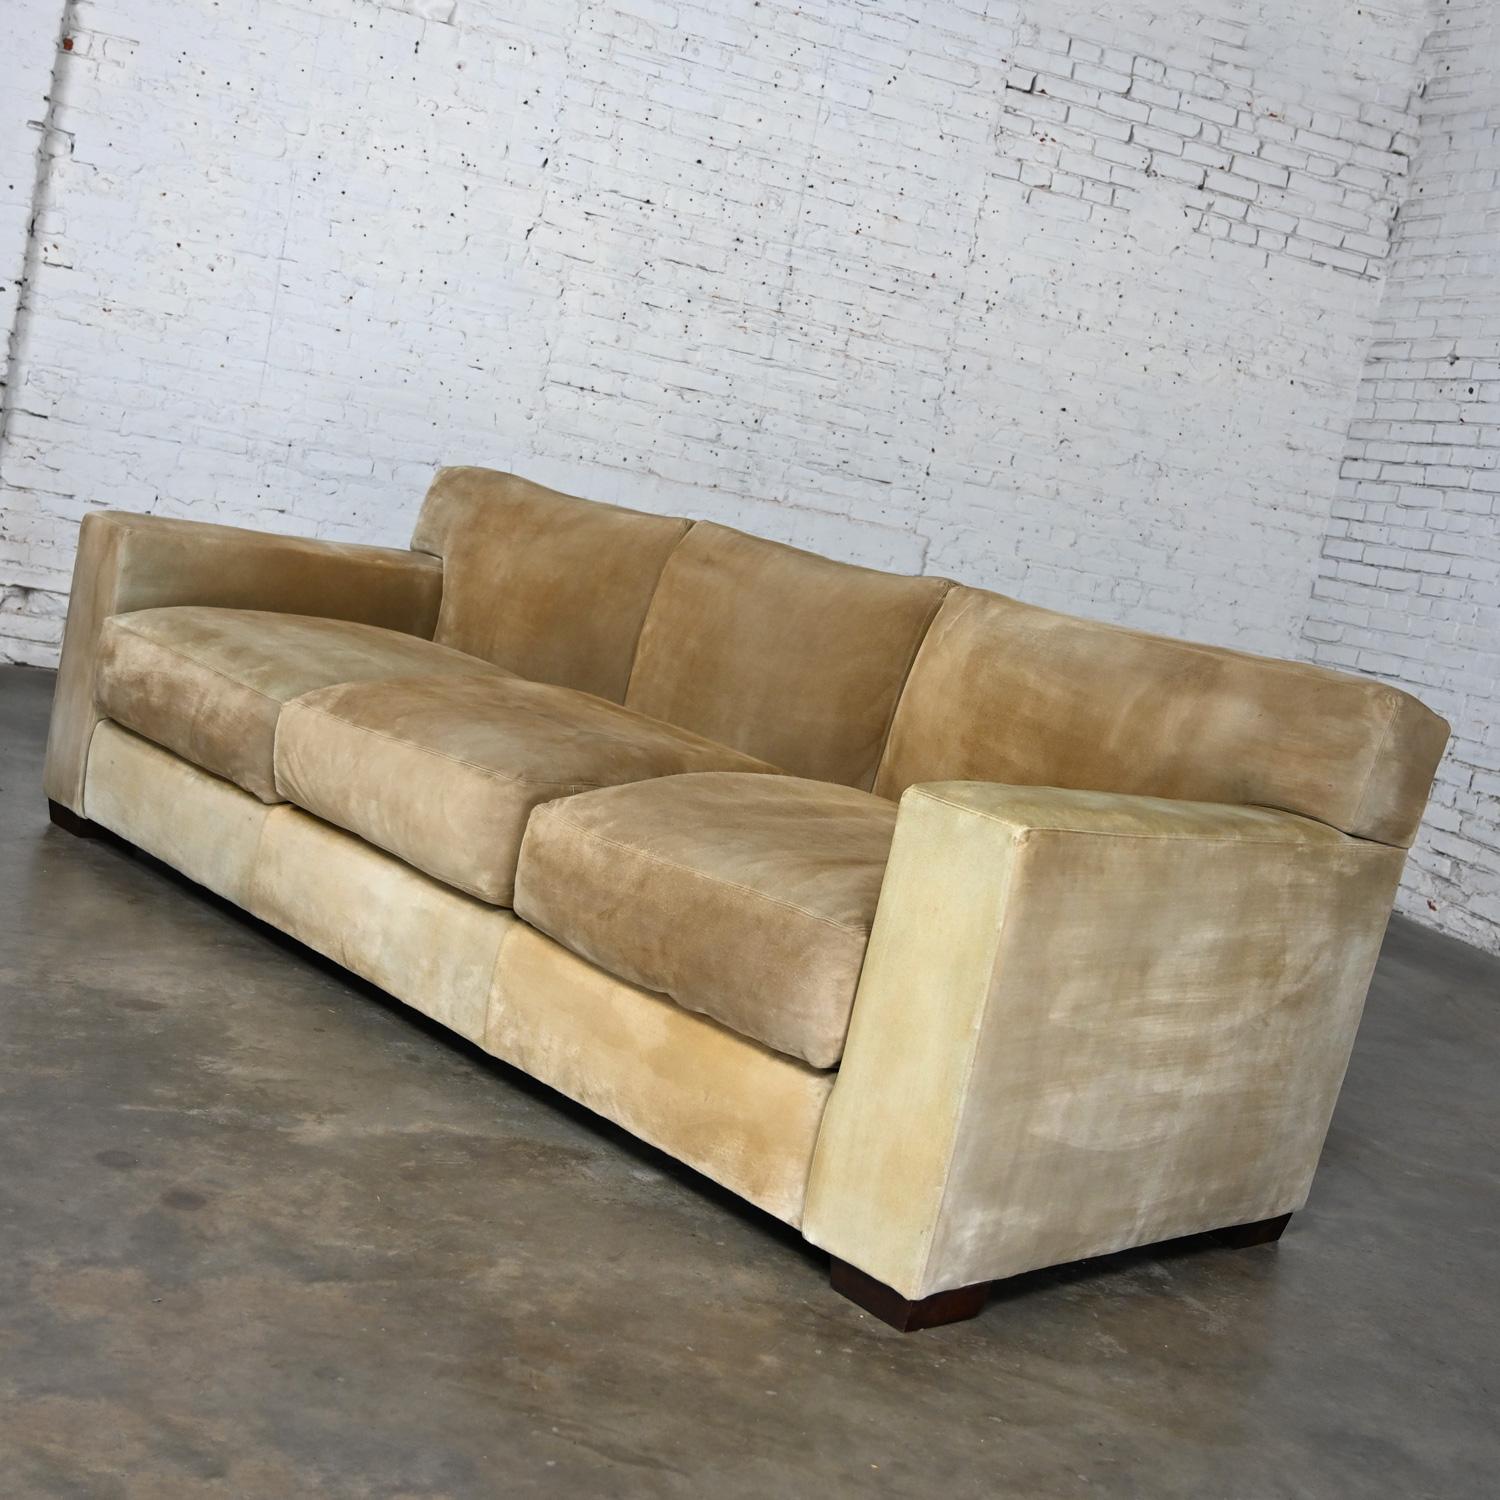 Rustic Late 20th Century Lawson Style Sofa Ralph Lauren Henredon Original Buff Suede